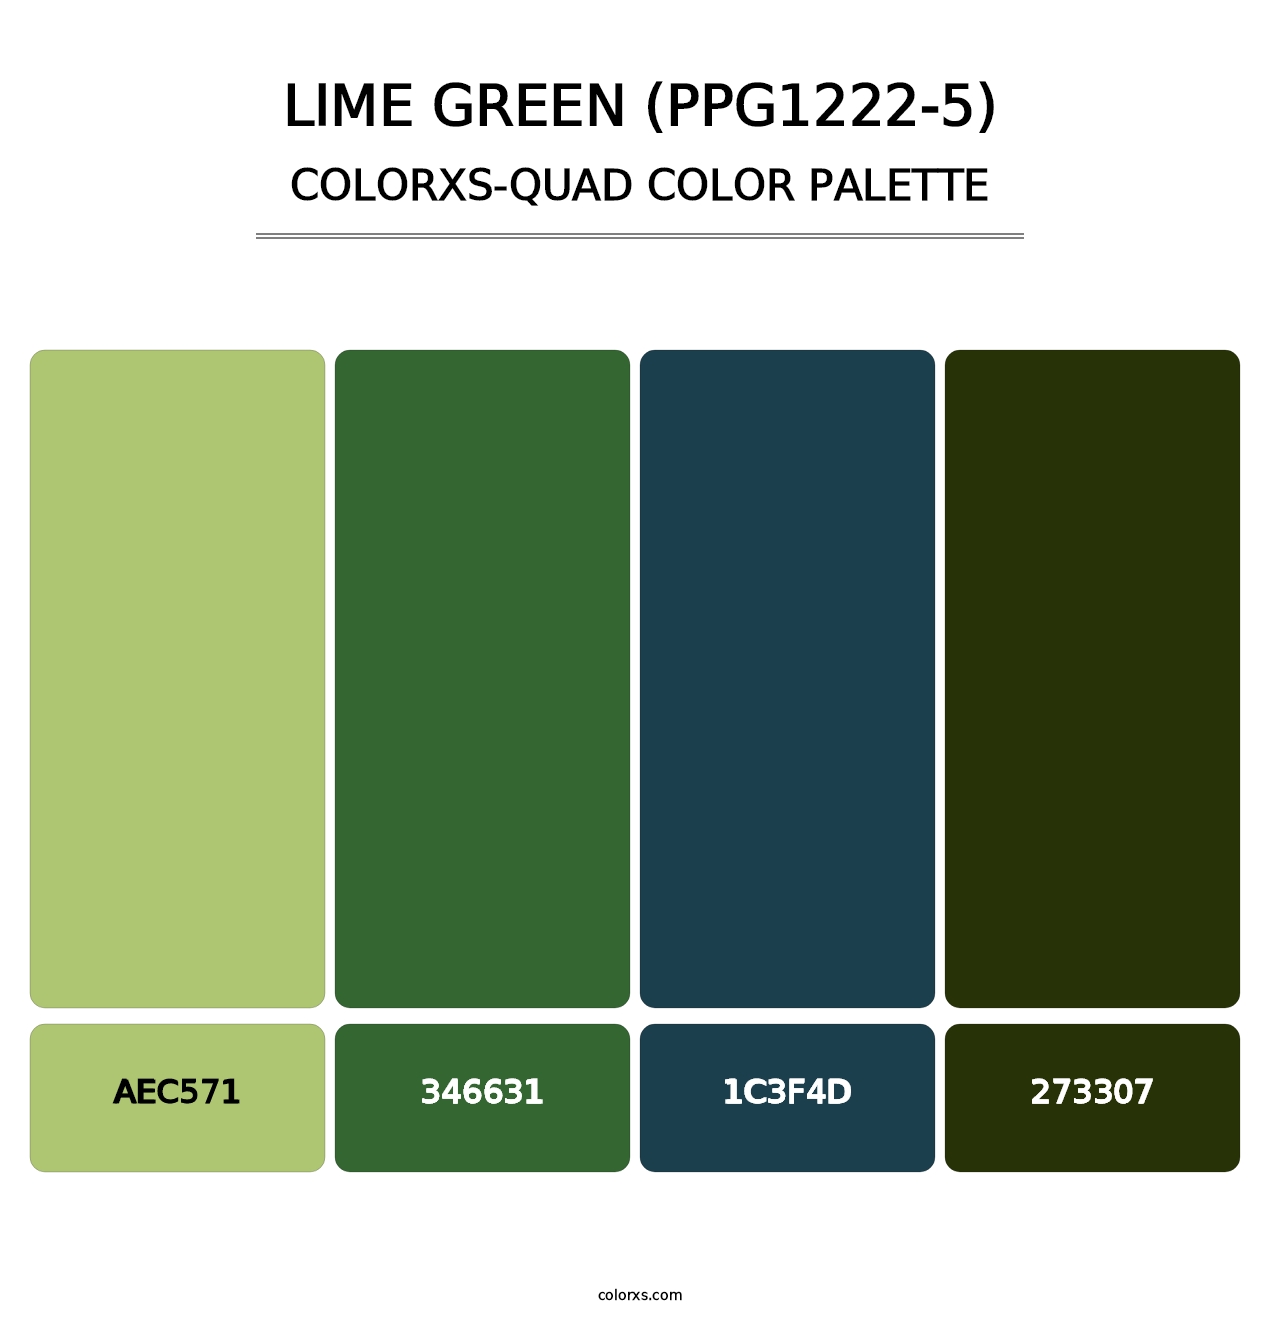 Lime Green (PPG1222-5) - Colorxs Quad Palette